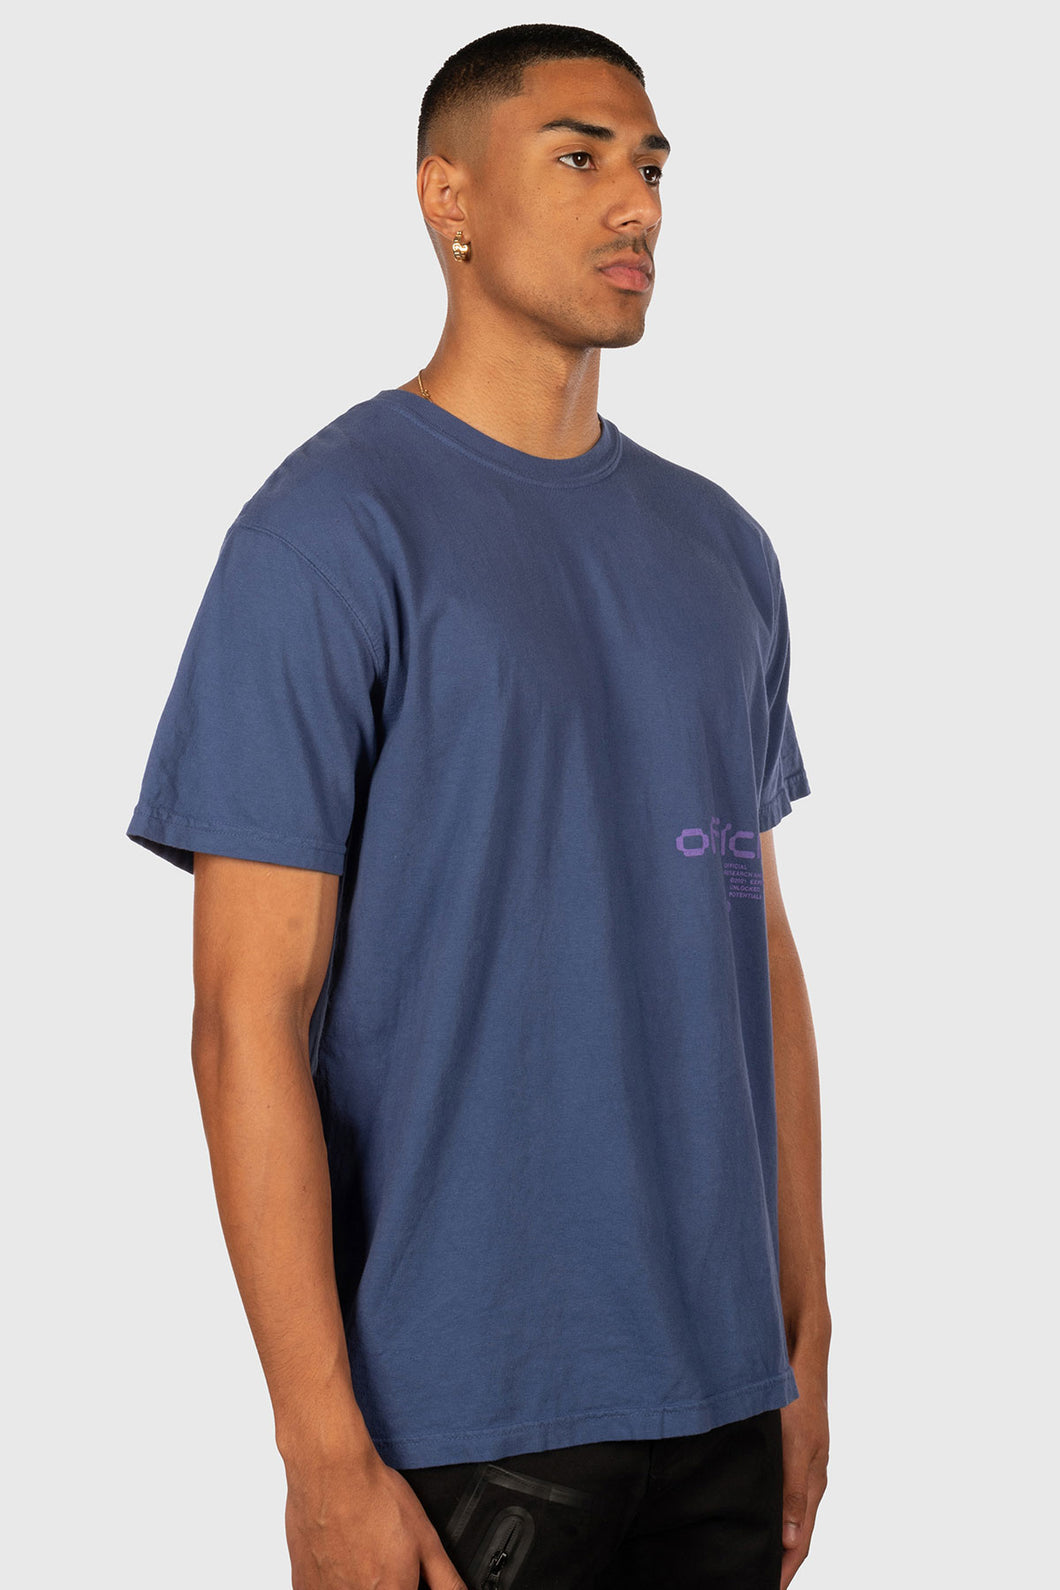 OFFICIAL/オフィシャル UNLOCKED POTENTIALS T-SHIRT プリントTシャツ